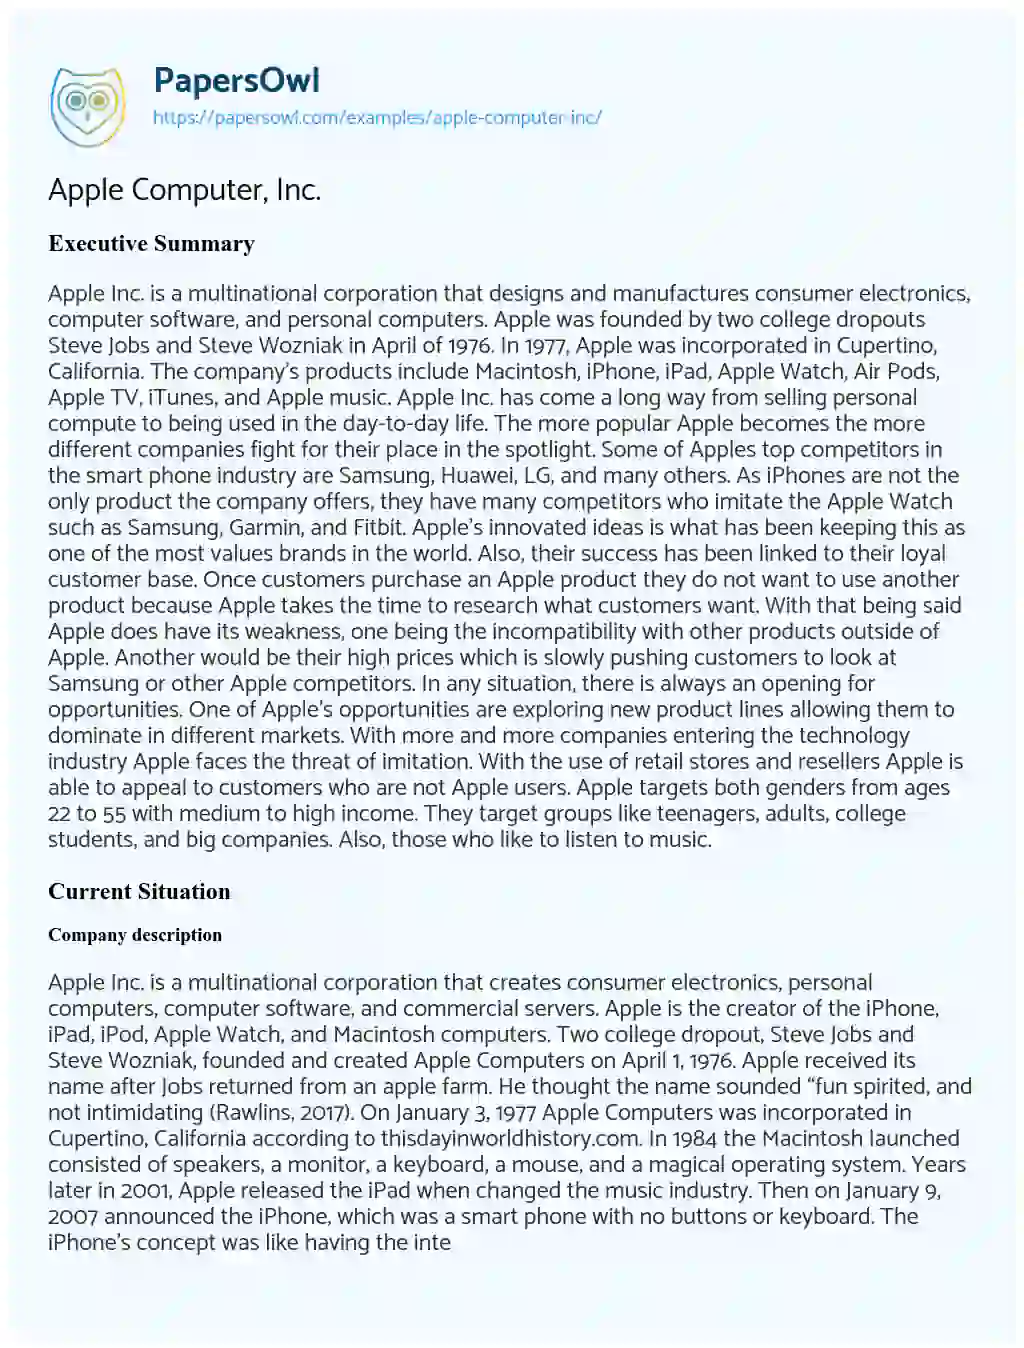 Apple Computer, Inc. essay